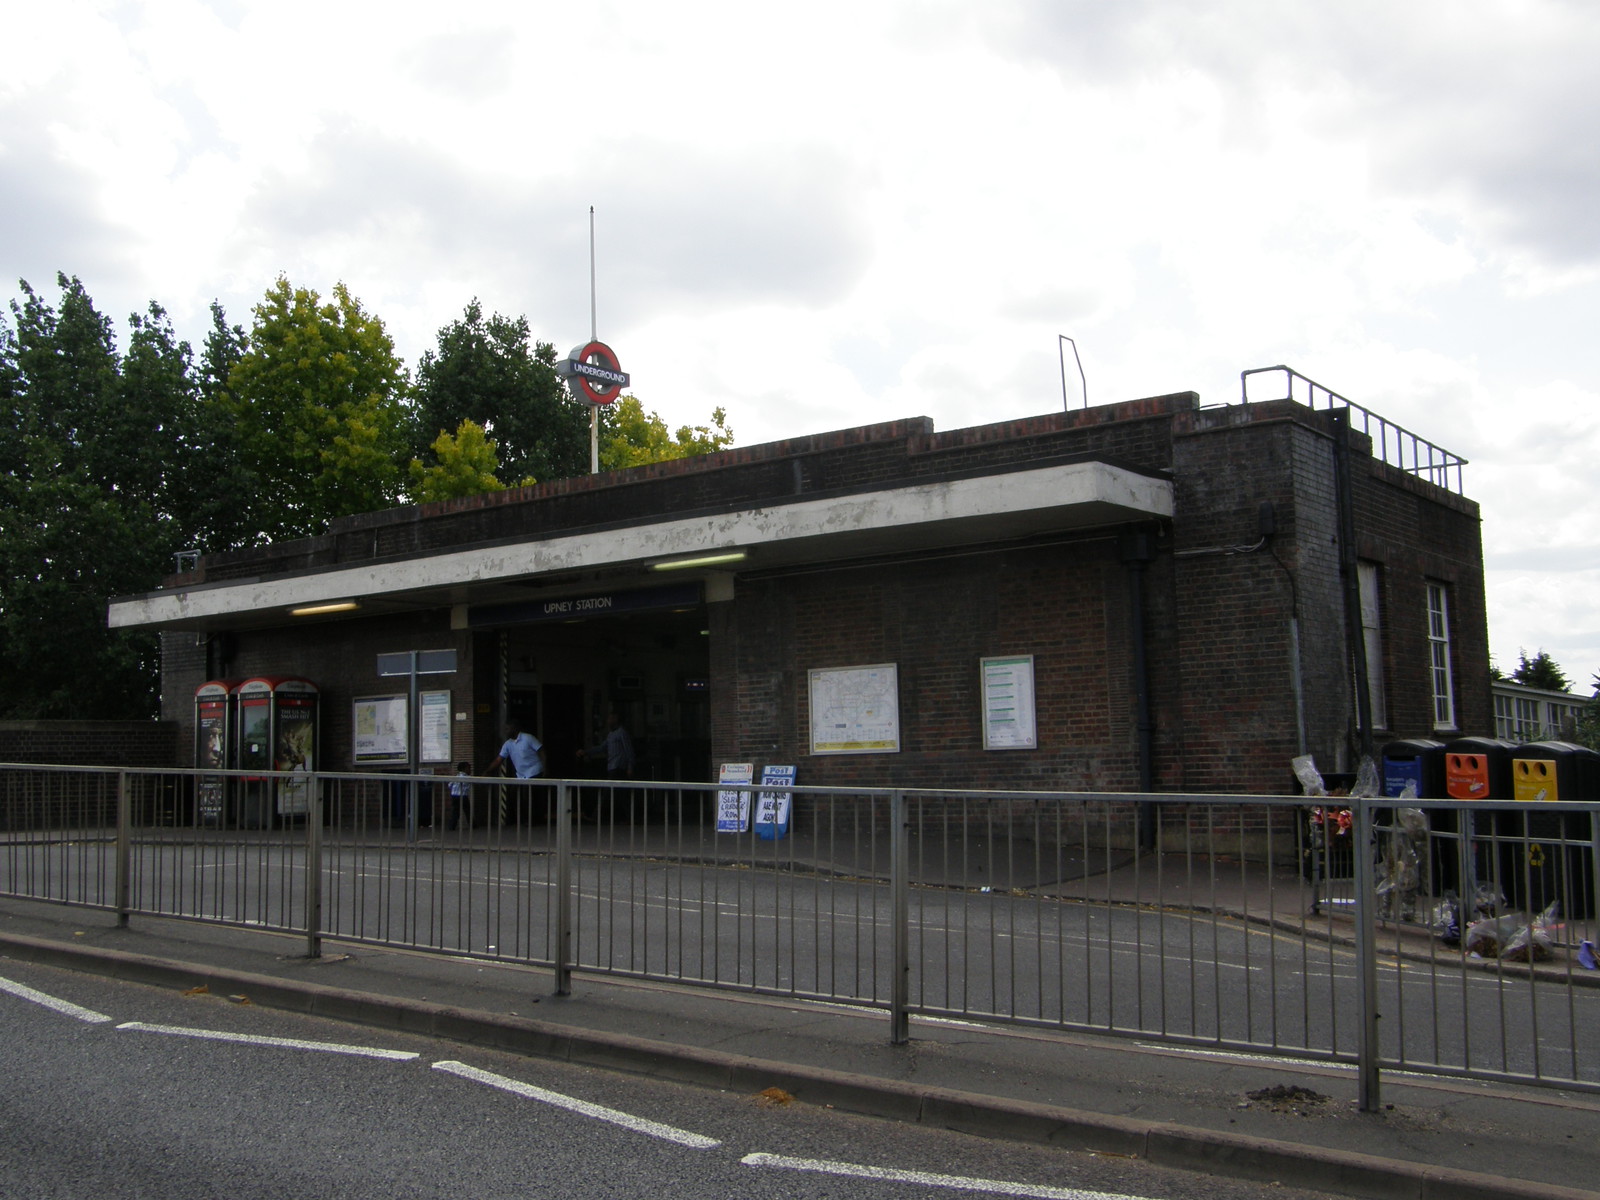 Upney station